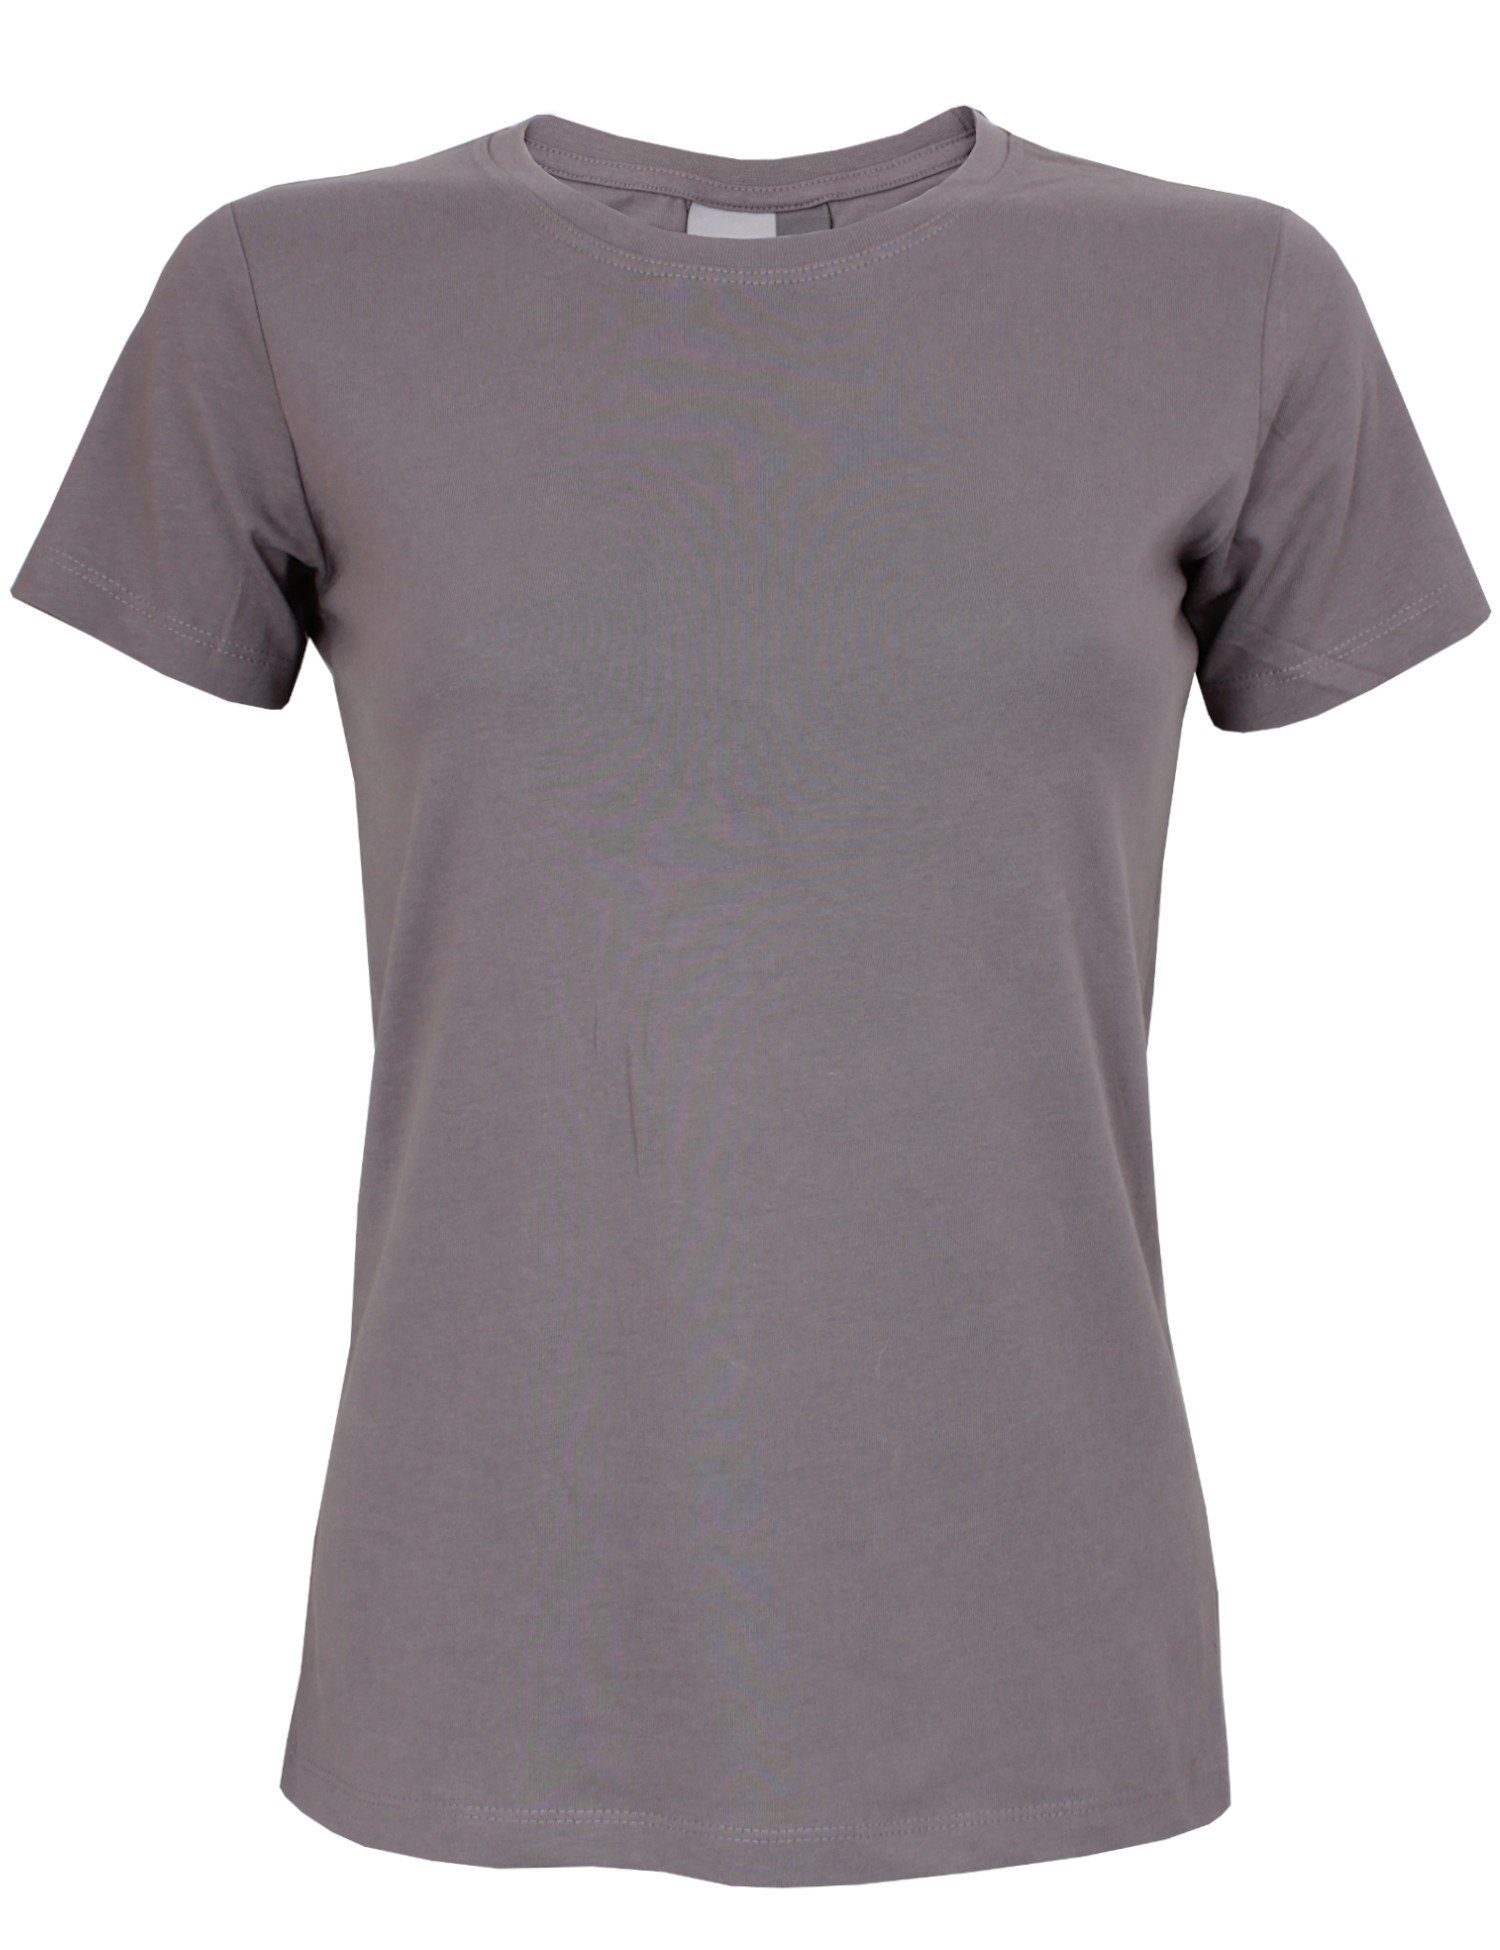 Promodoro Rundhalsshirt Women’s Premium-Shirt grey light Unifarben